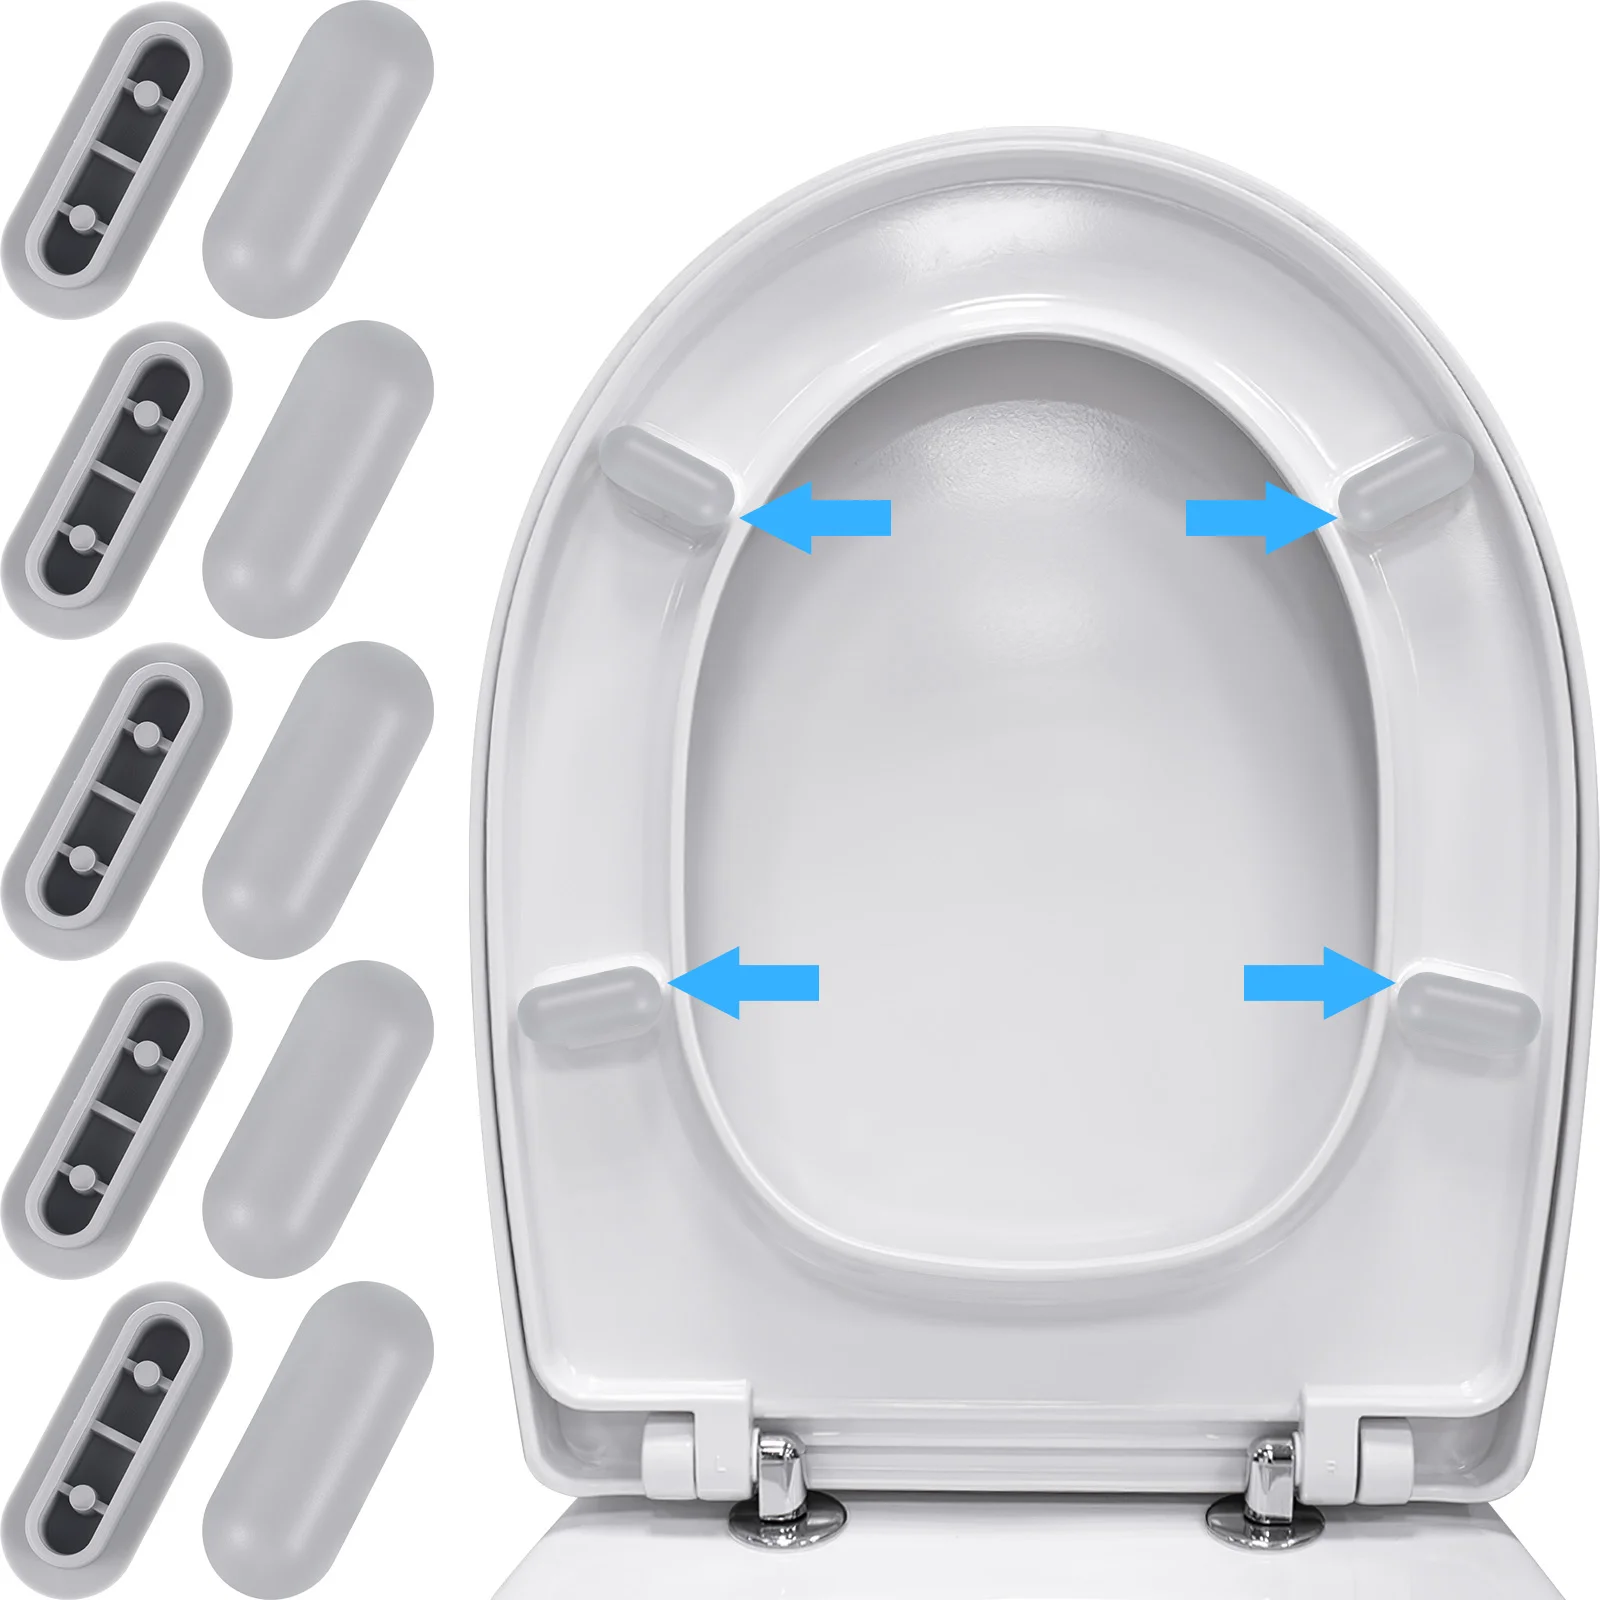 10 Pcs Cushion Toilet Gasket Travel Accessories Self-adhesive Pad Plastic Anti-slip